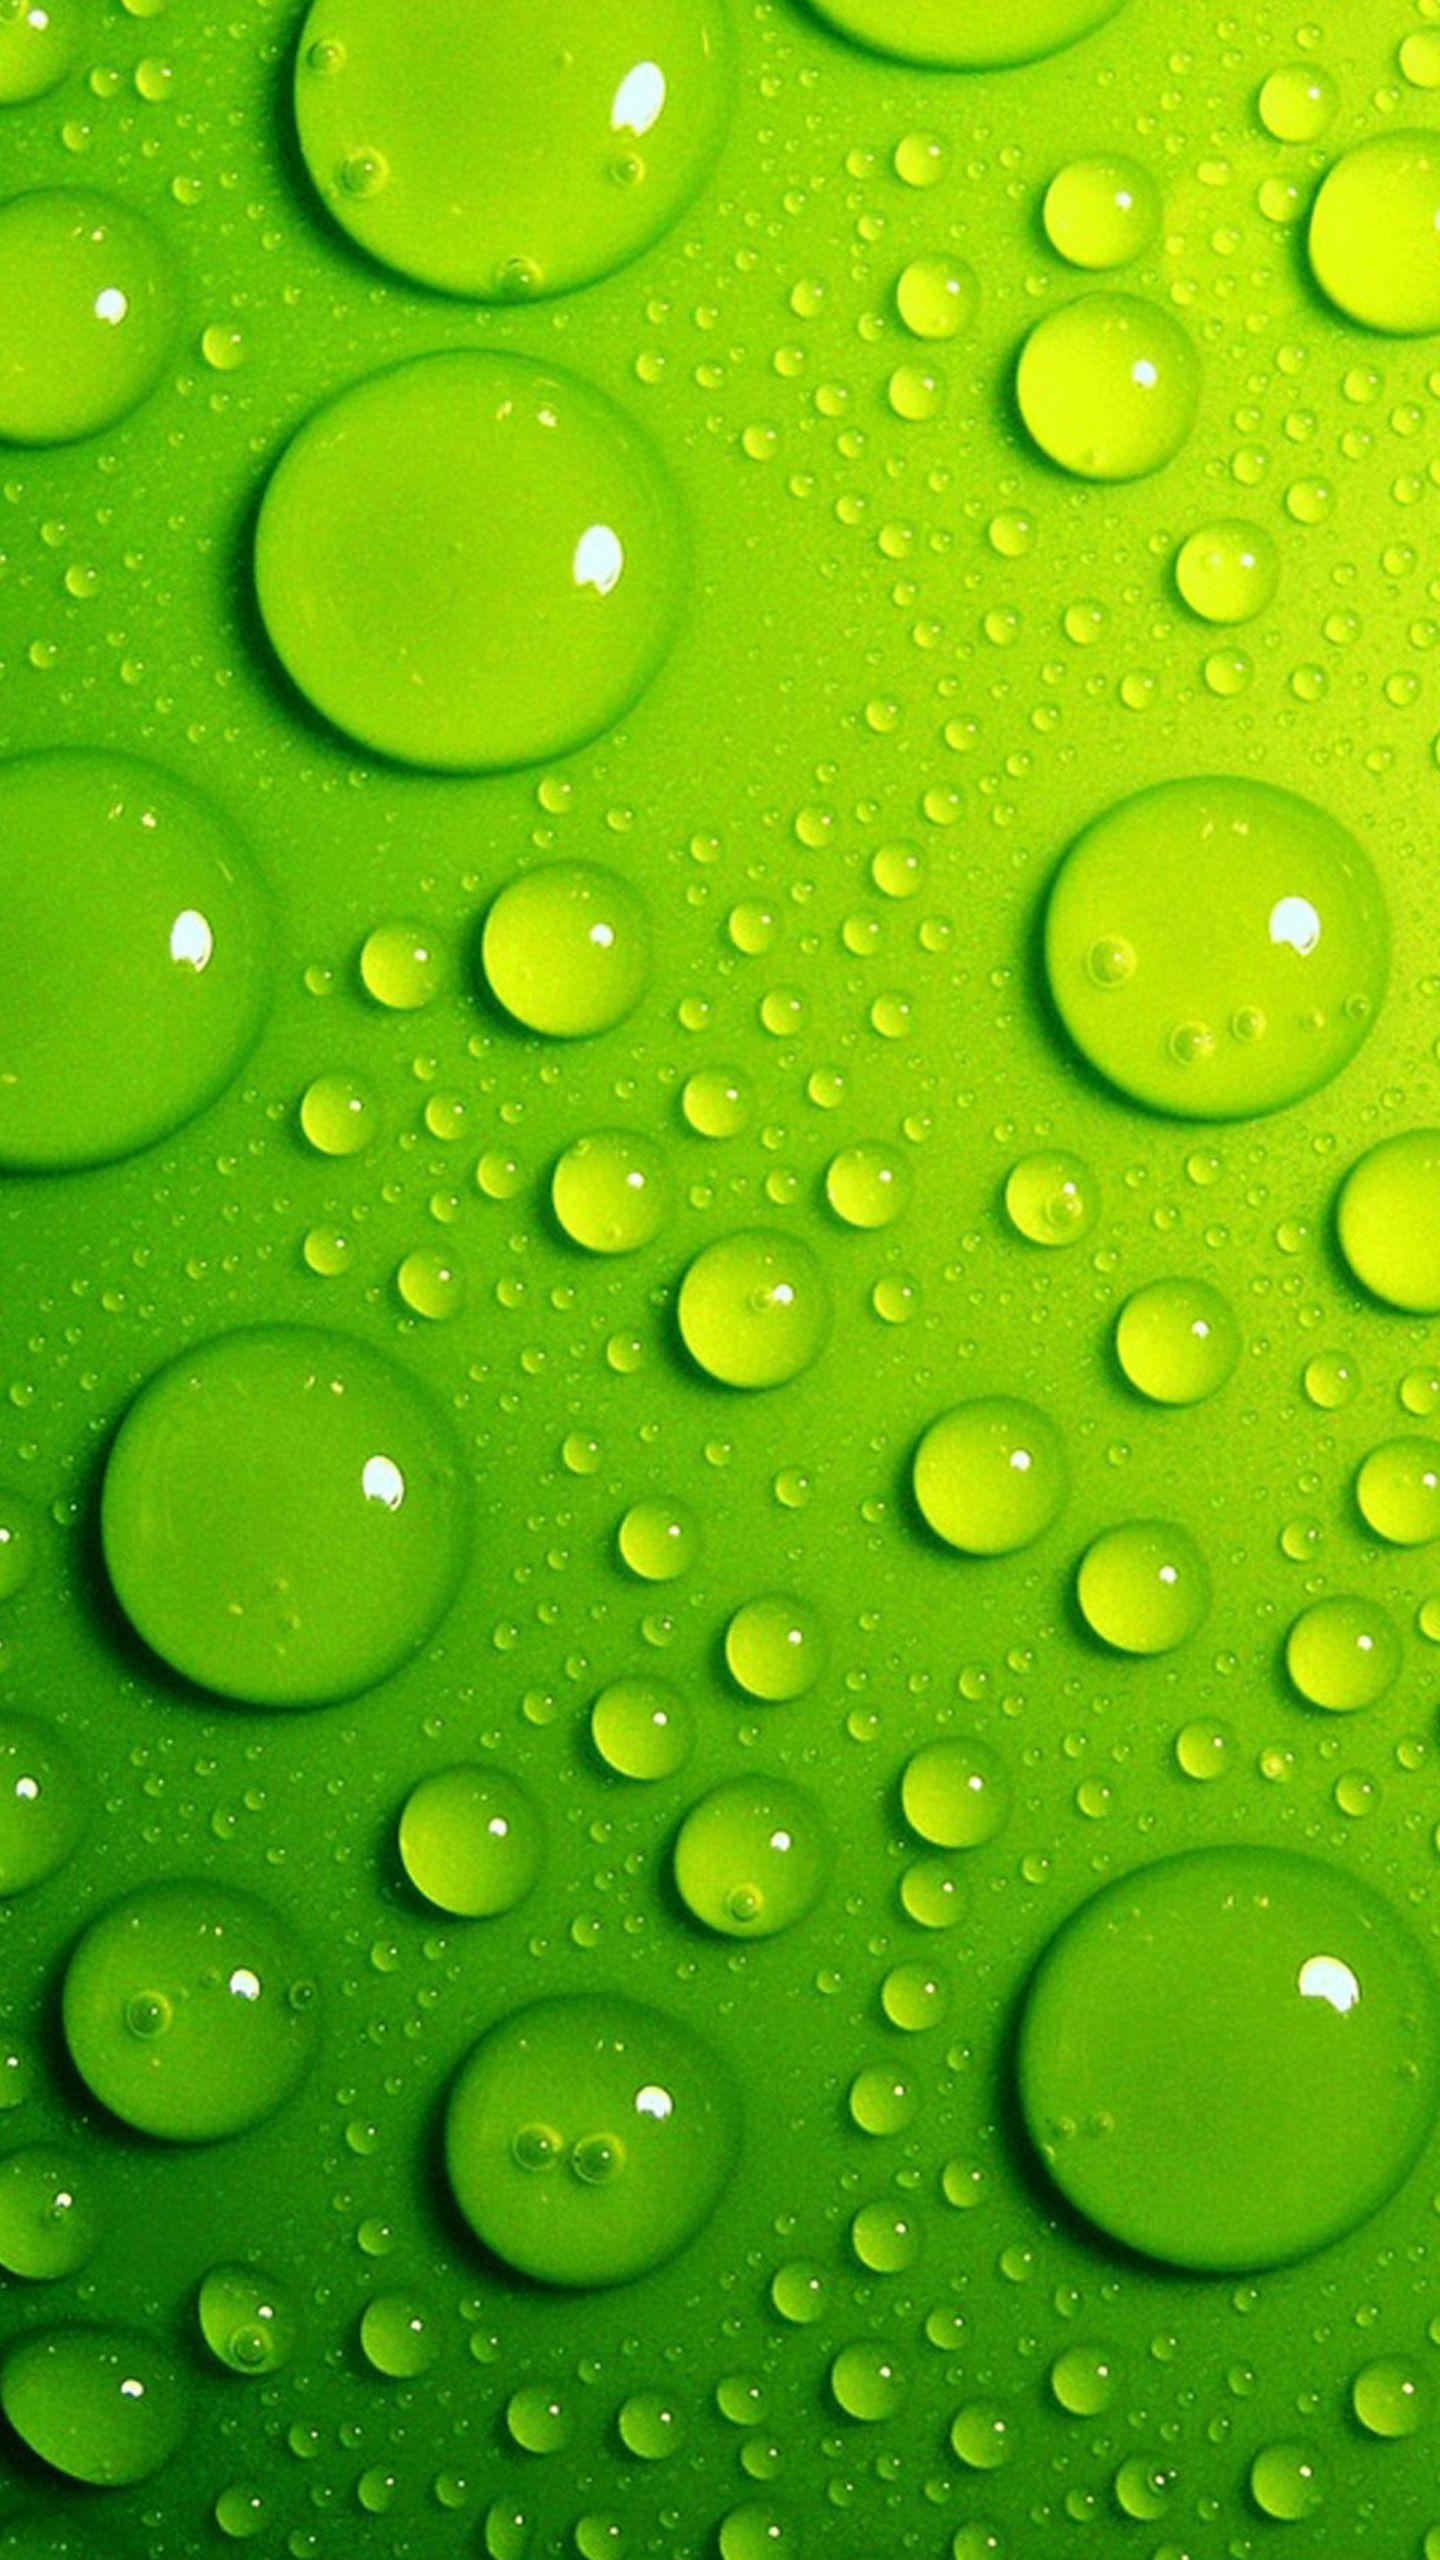 Green Water Drops Galaxy S6 Wallpaper (1440x2560)